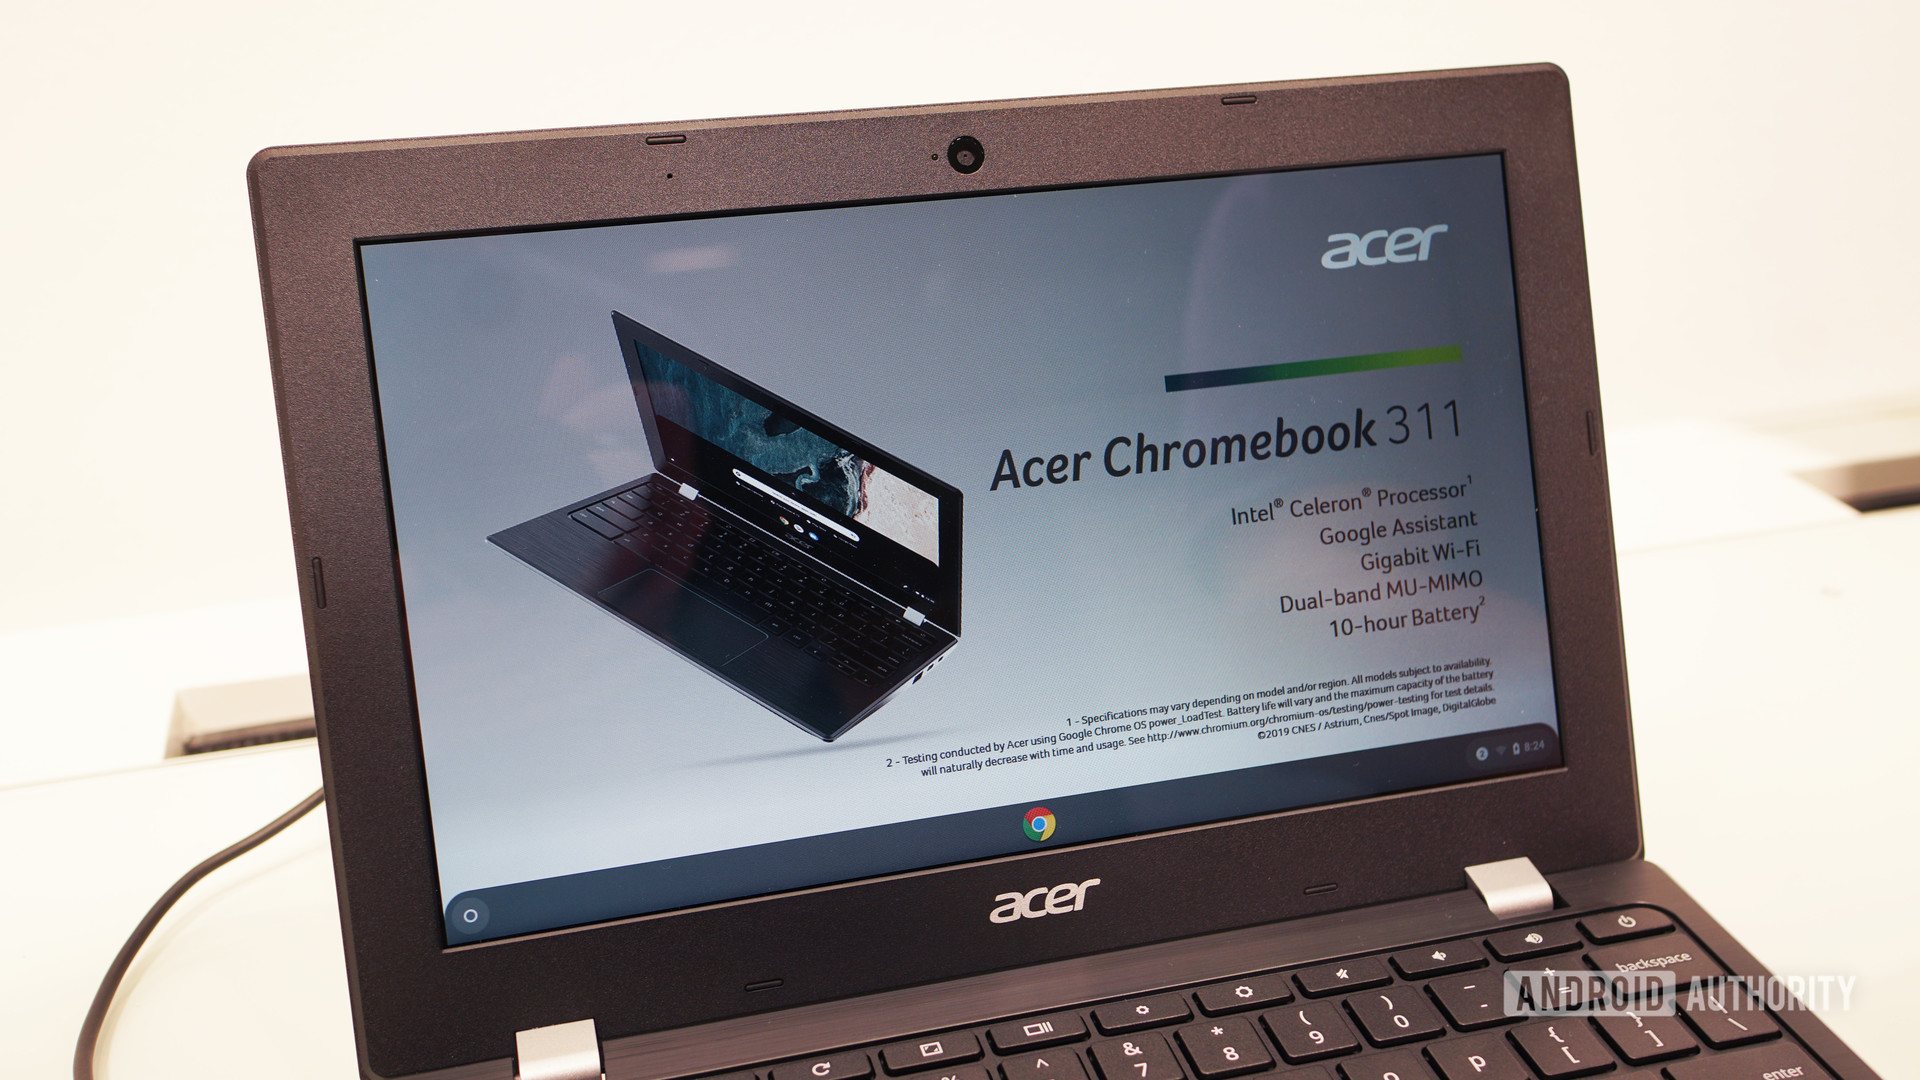 Acer Chromebook 311 display